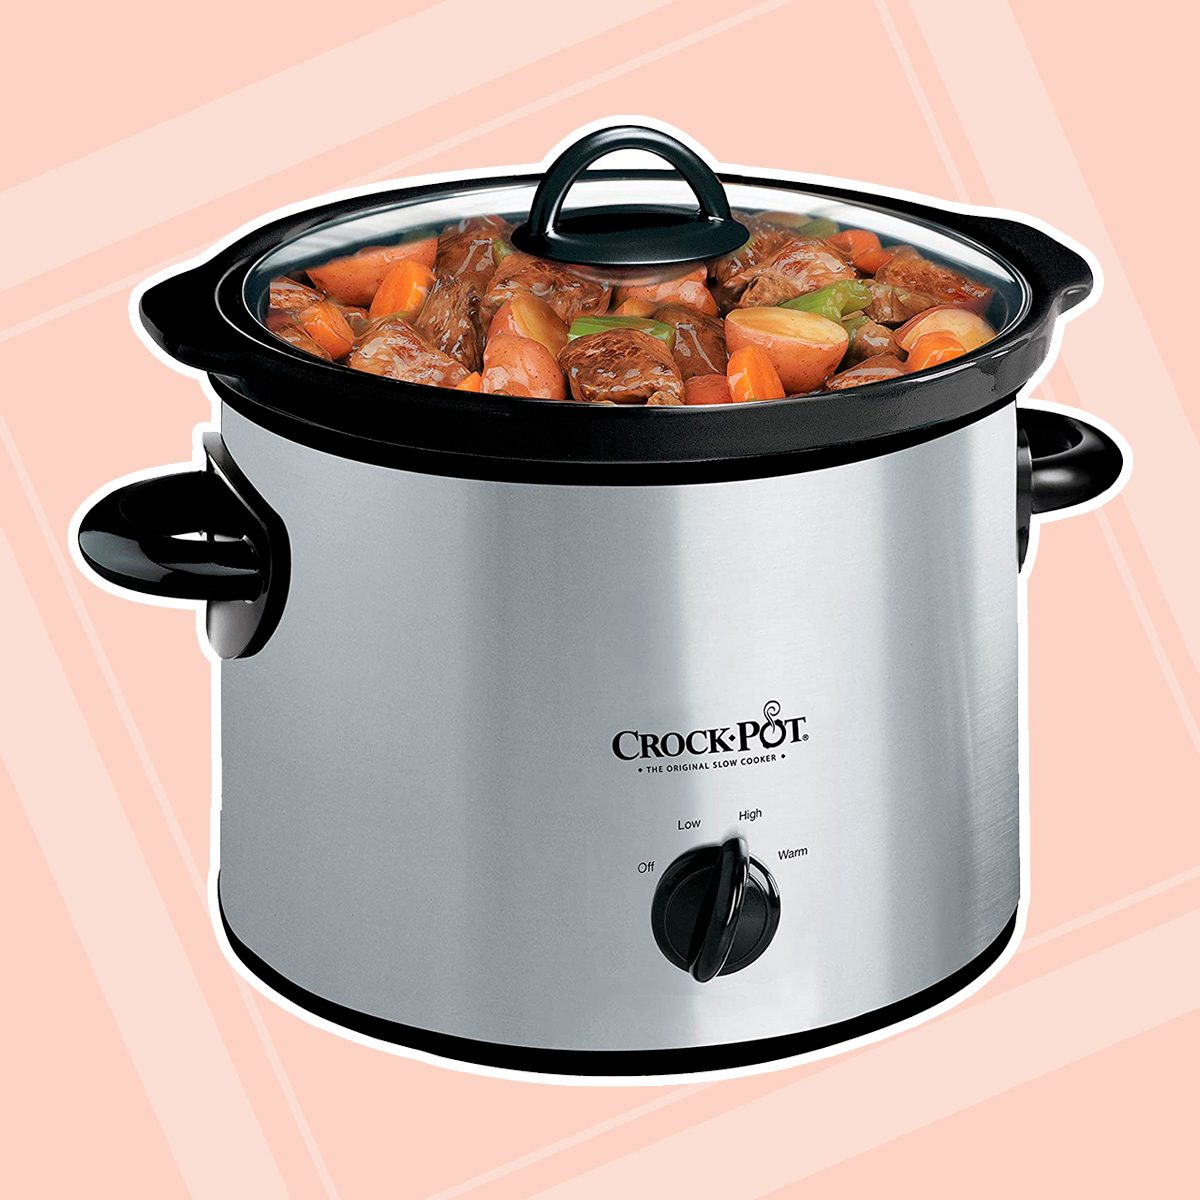 Crock Pot Cook and Carry 6 Qt. Manual Slow Cooker - Black